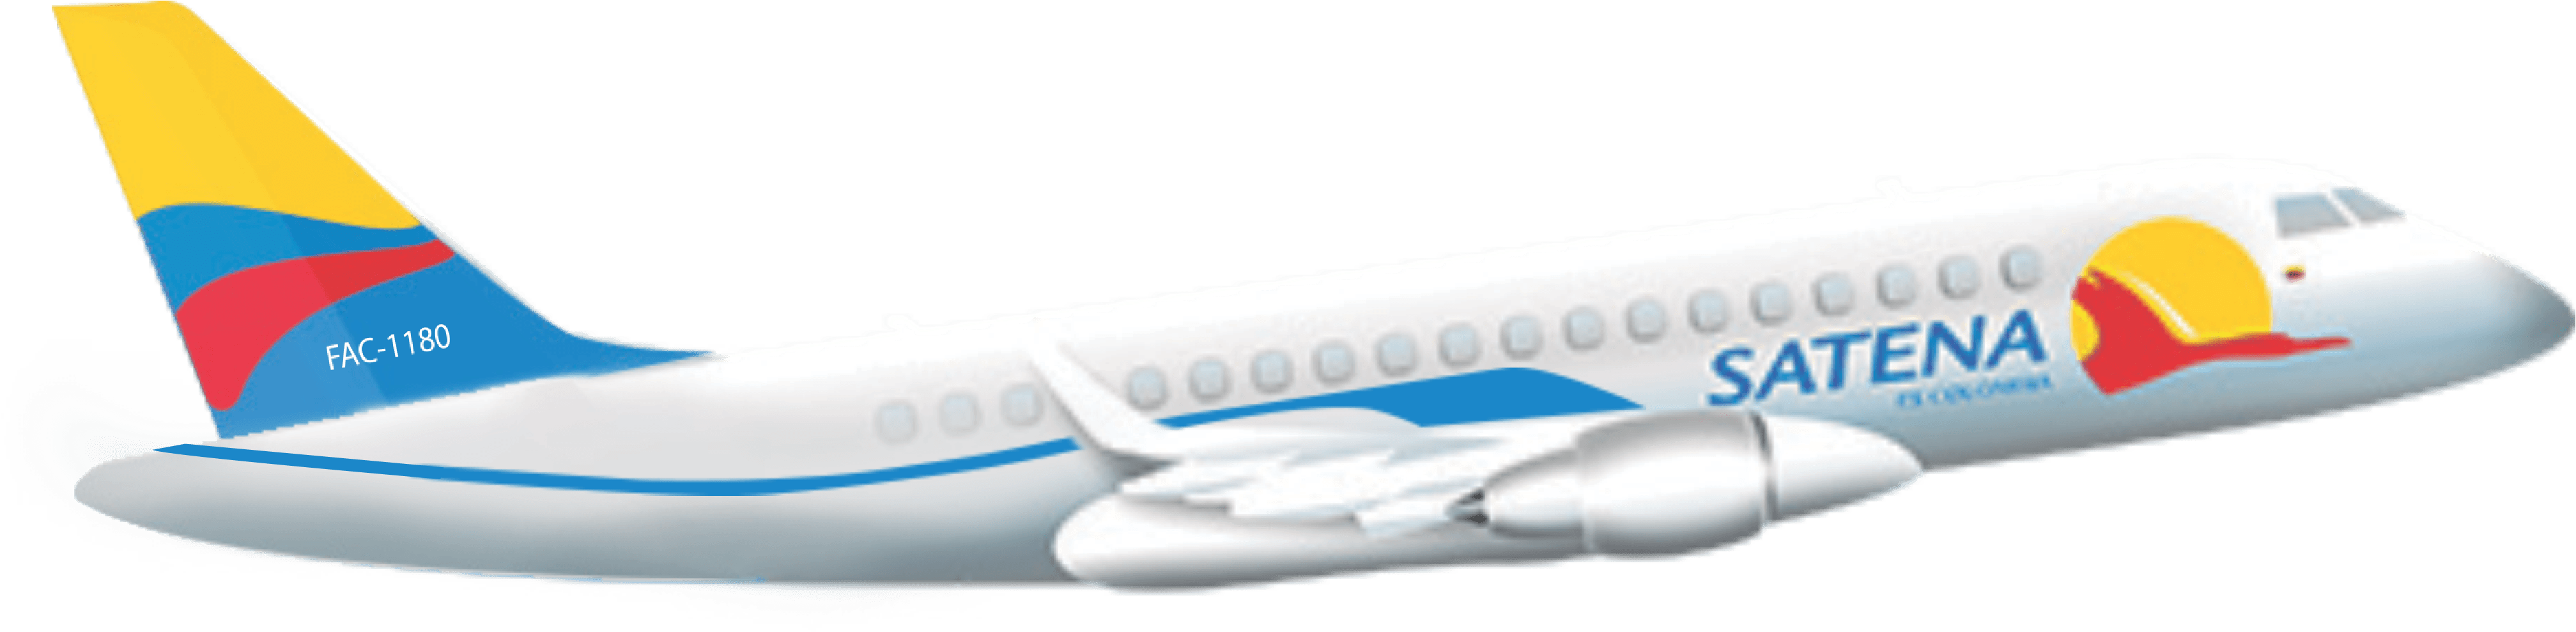 Avion Png 4031 X 989